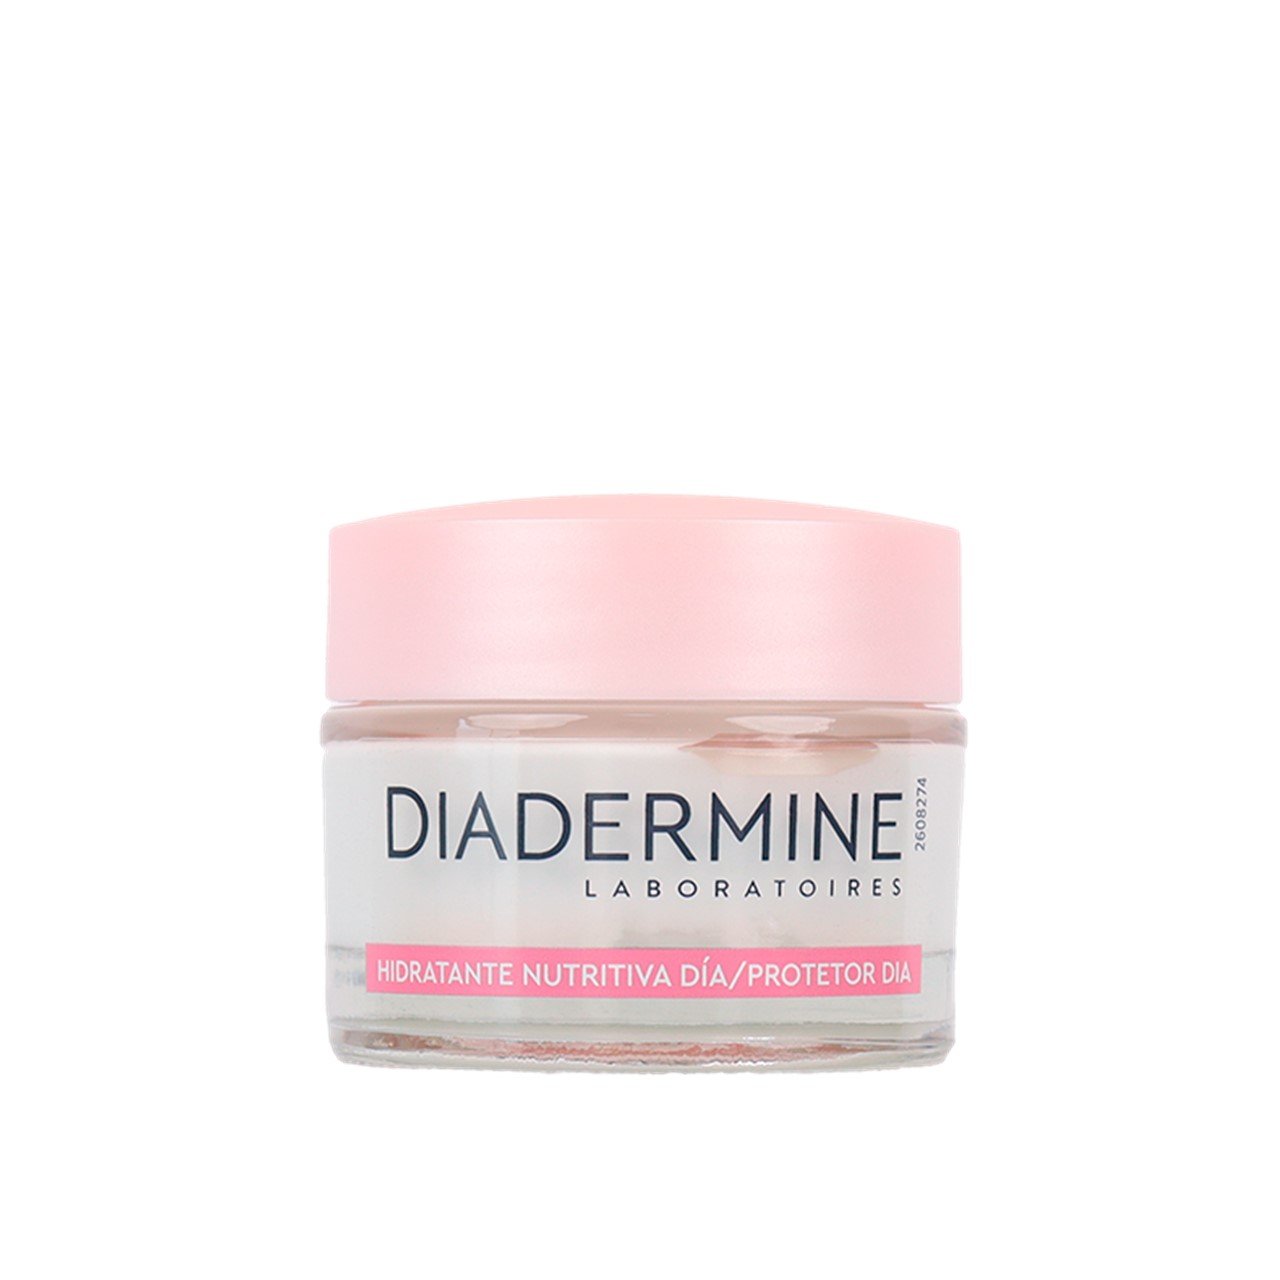 Diadermine Nourishing Moisturizing Day Cream 50ml (1.69fl oz)